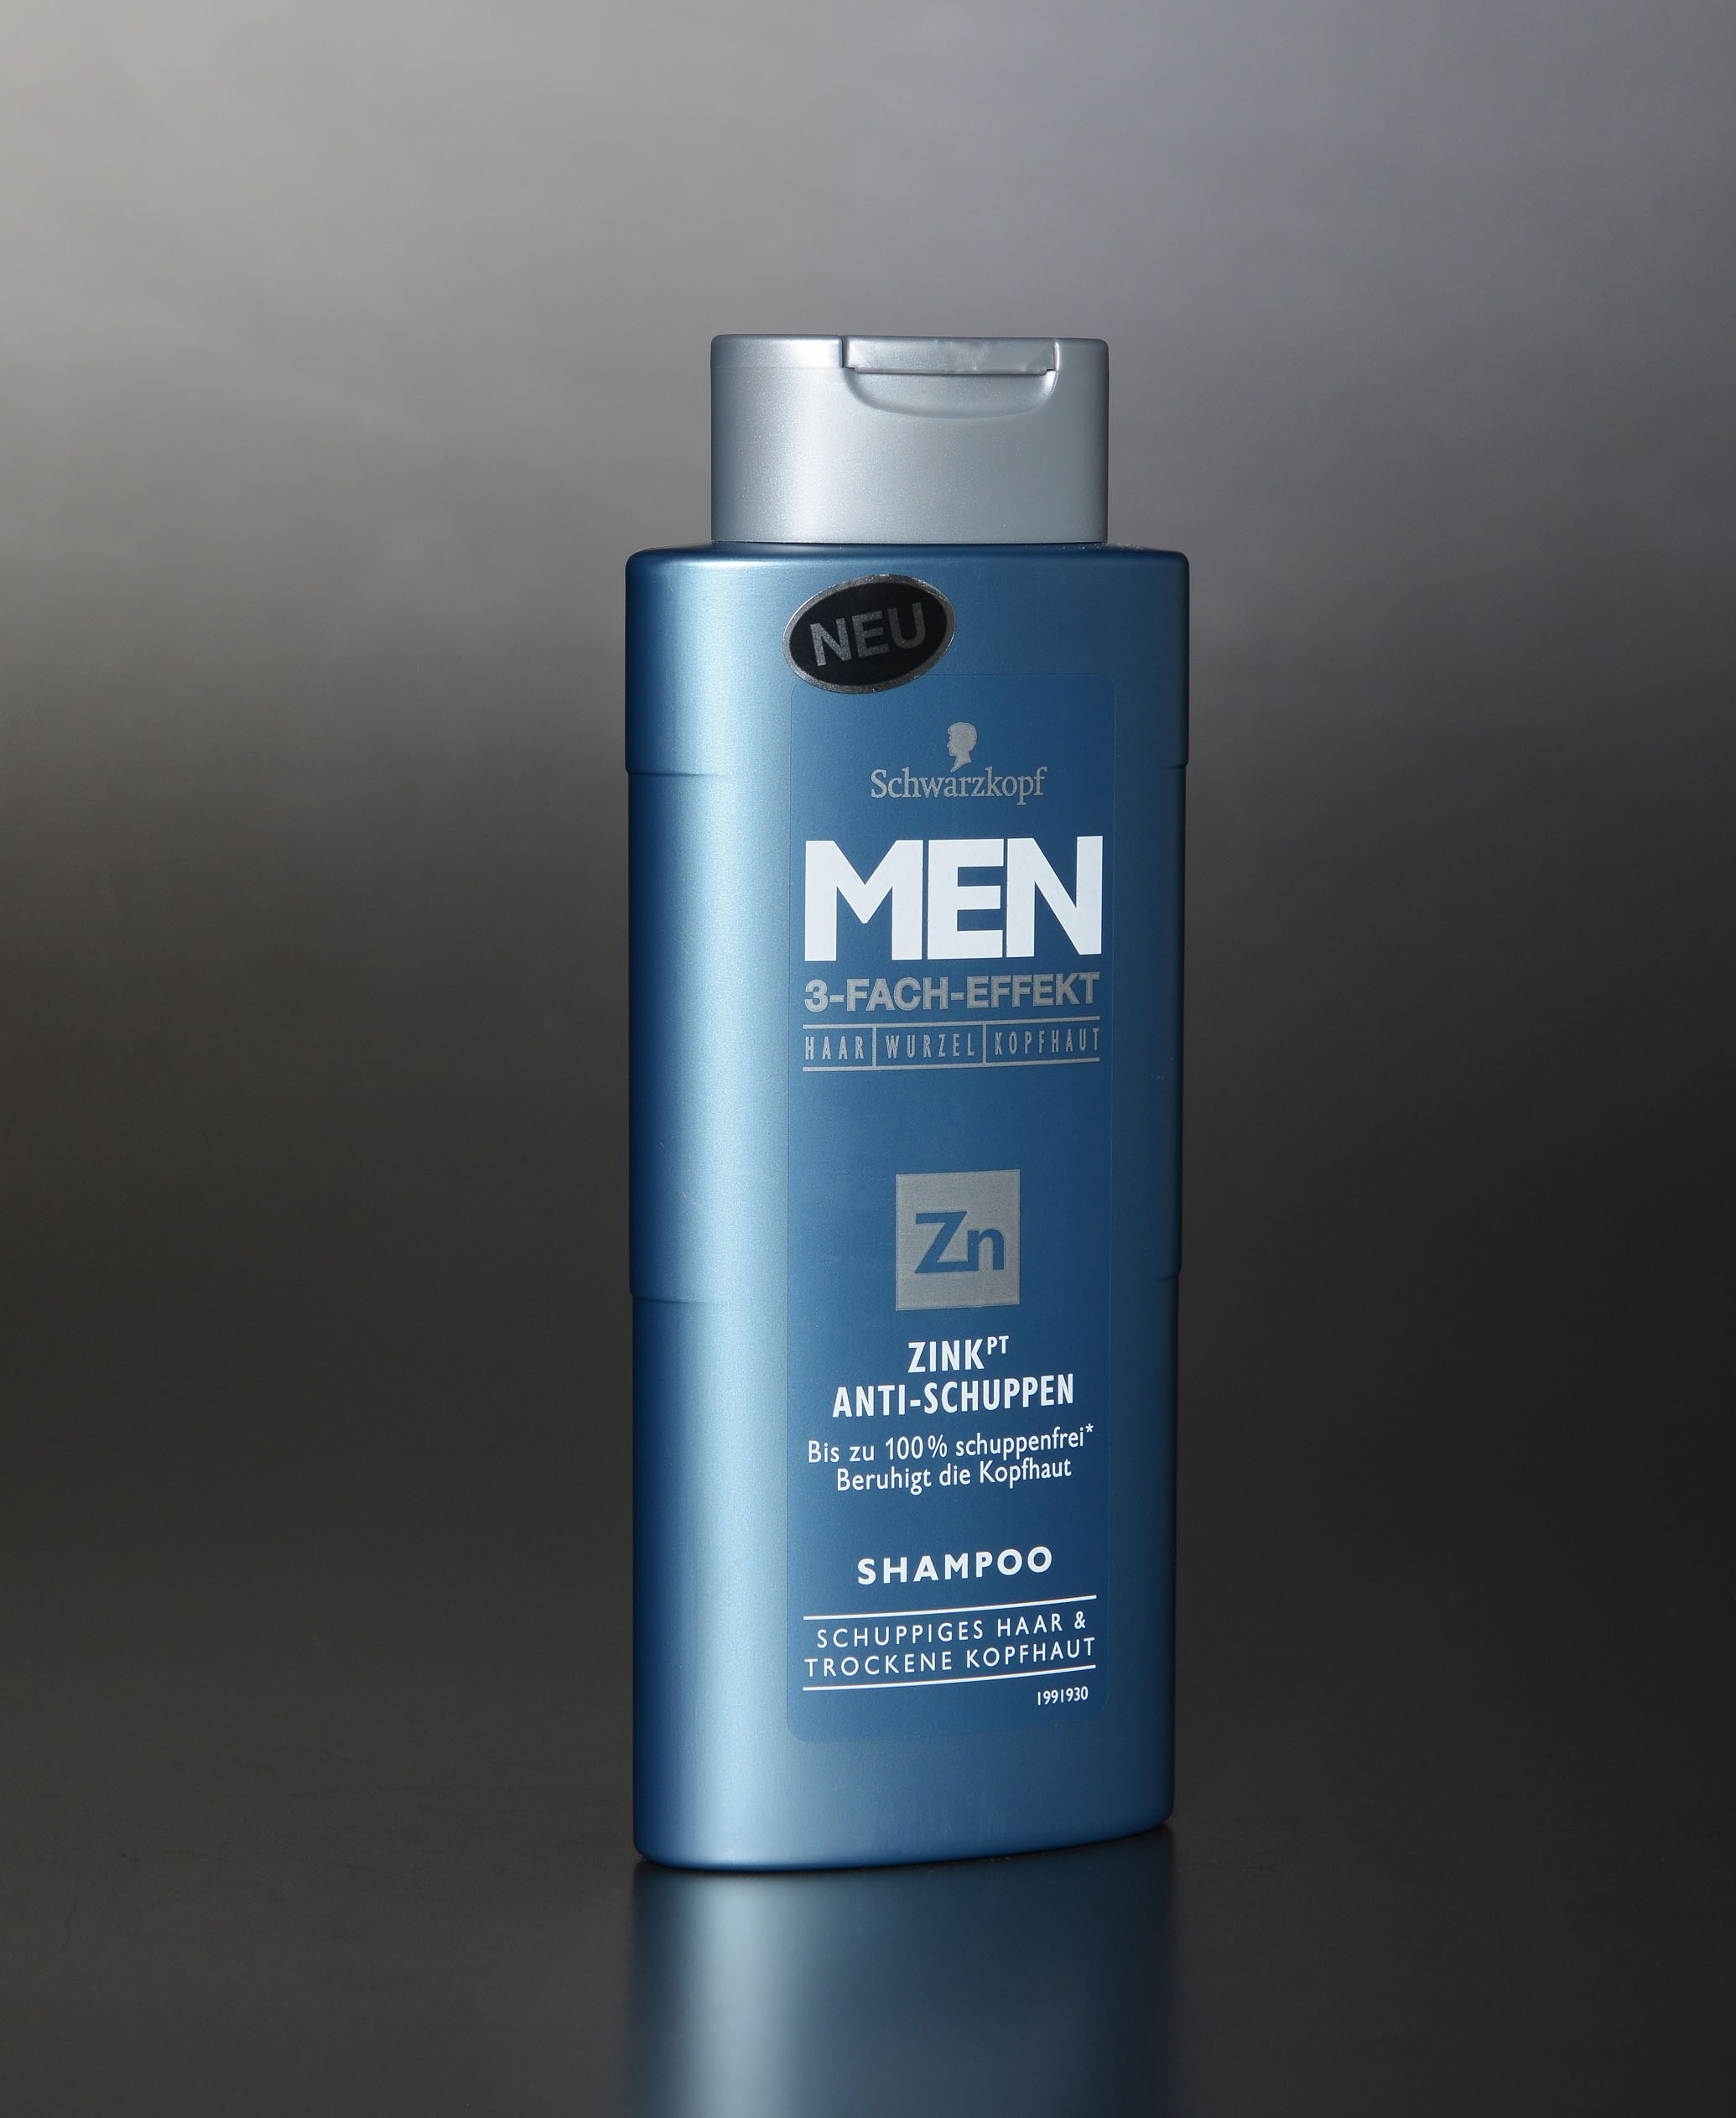 Details more than 144 shampoo for dry hair men super hot - dedaotaonec